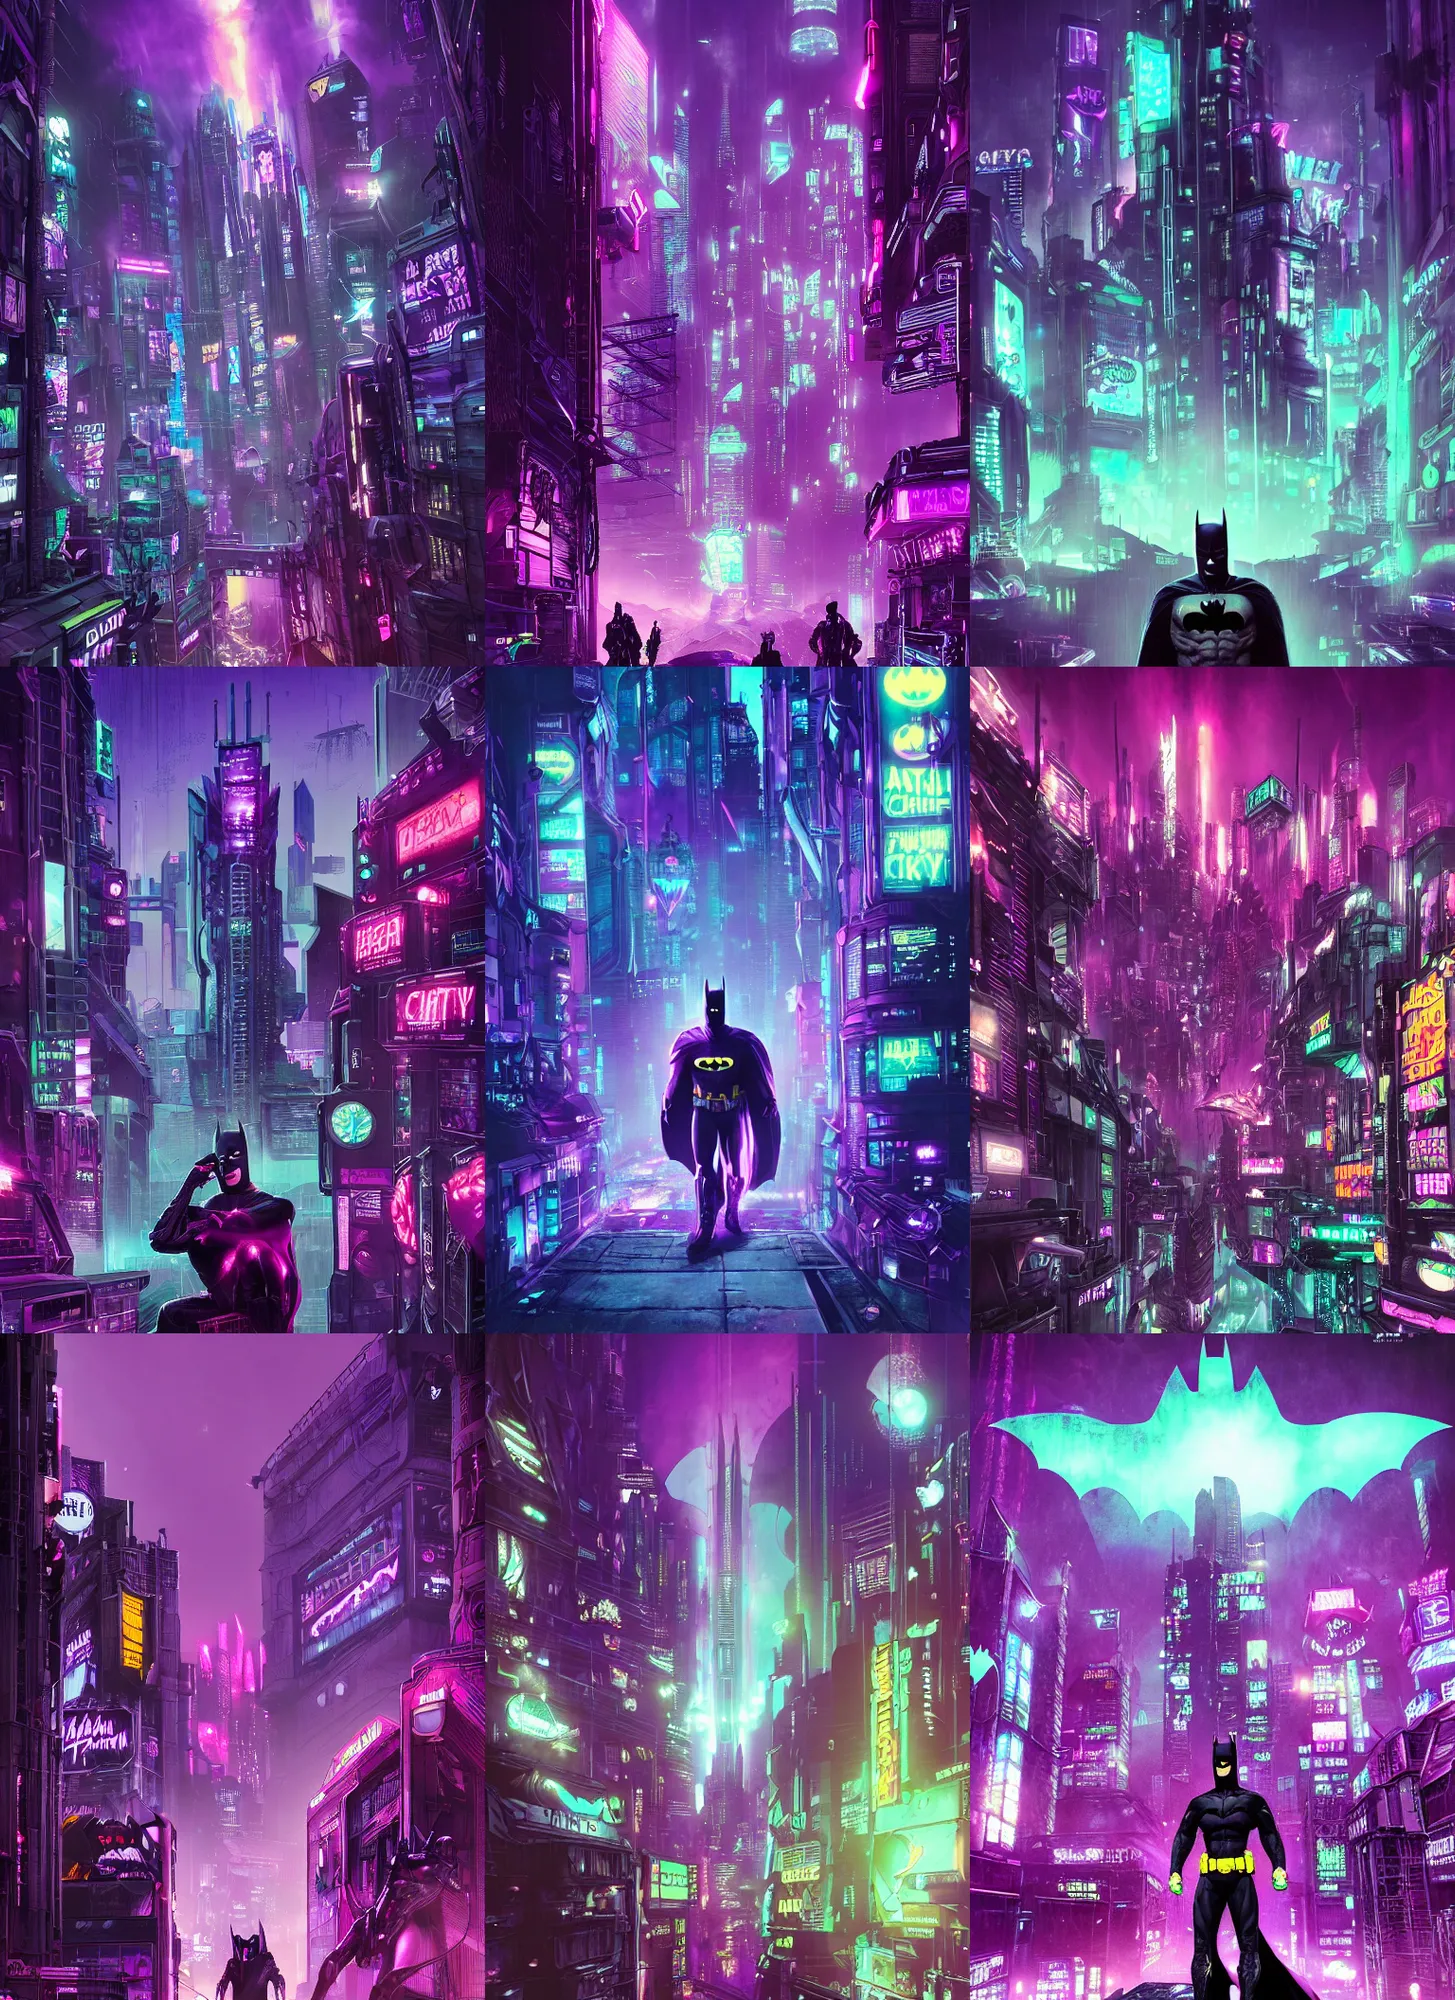 Prompt: a caption of batman arkham scifi neon city in front of a purple background, cyberpunk art by dan mumford, drulliet, greg rutkowski, behance contest winner, shock art, reimagined by industrial light and magic, aesthetic neon, synthwave, darksynth